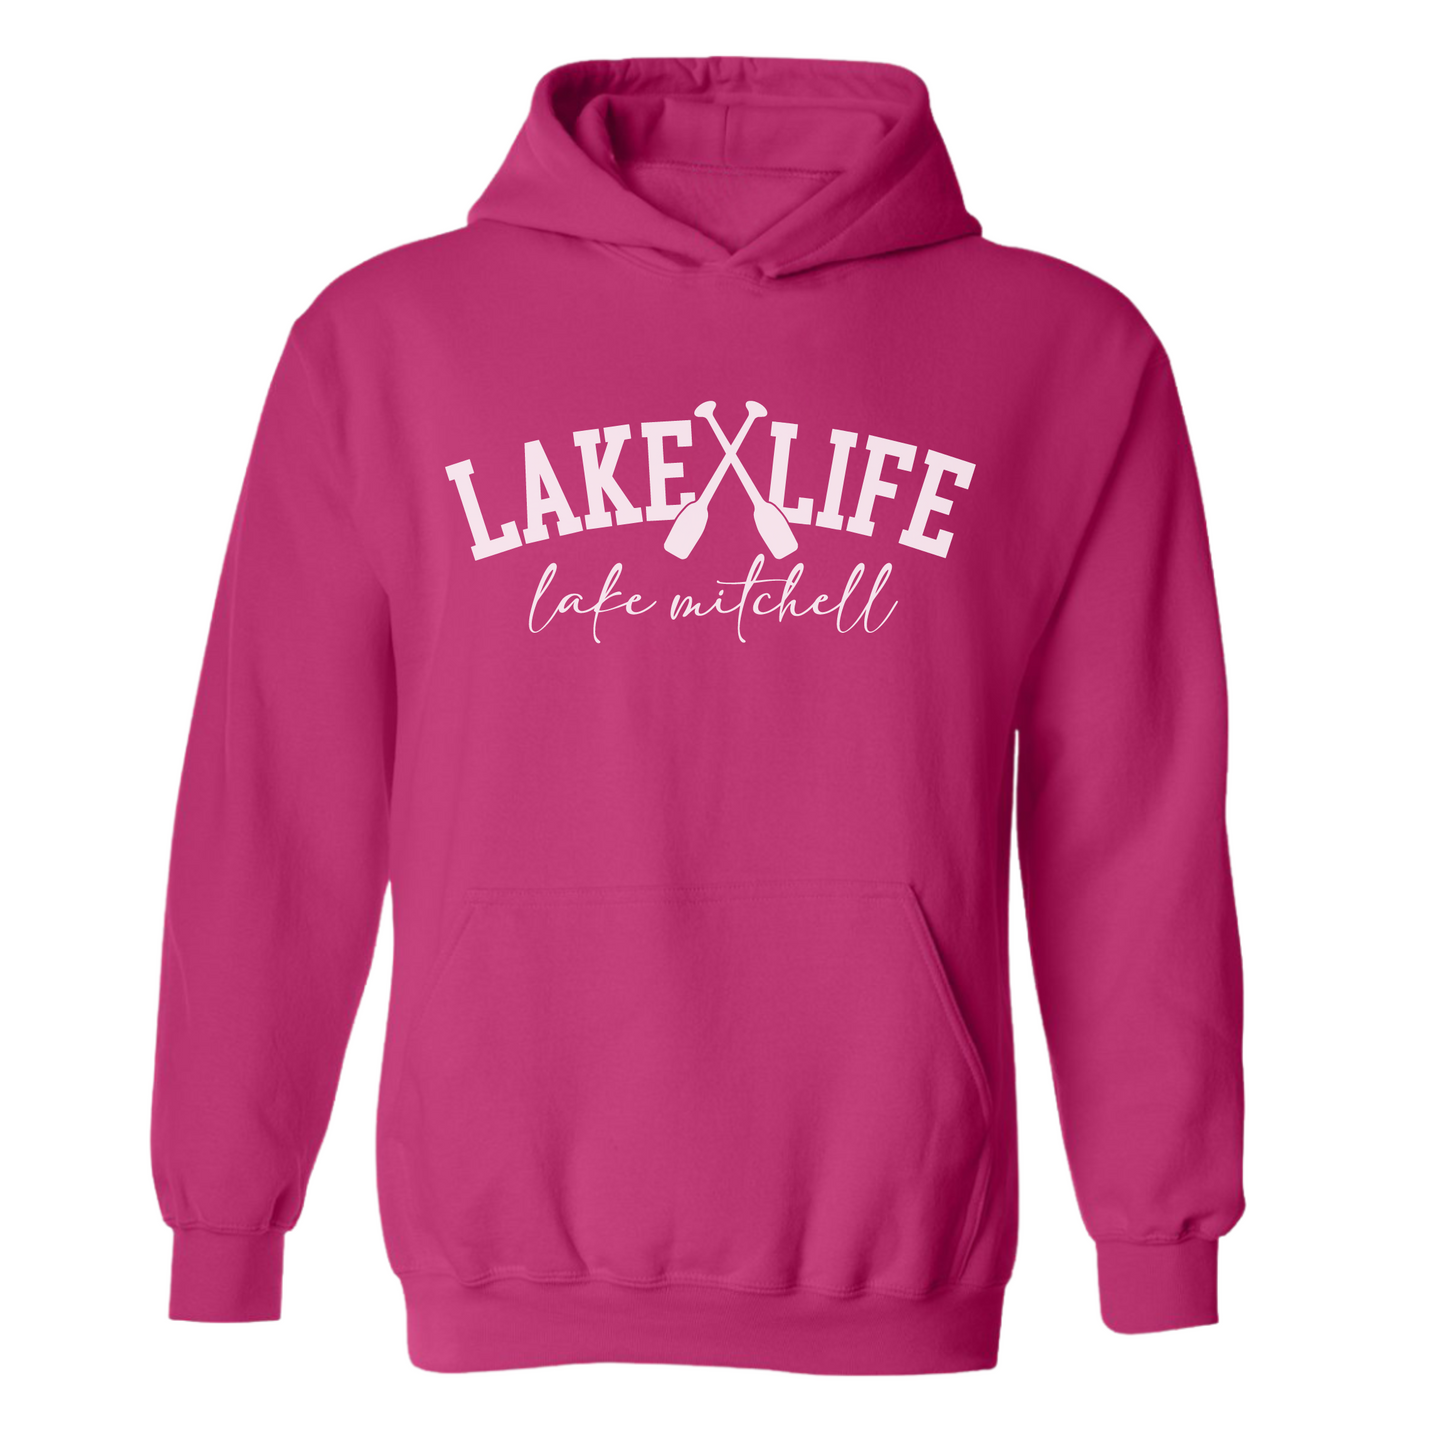 Lake Life Lake Mitchell Adult Hoodie